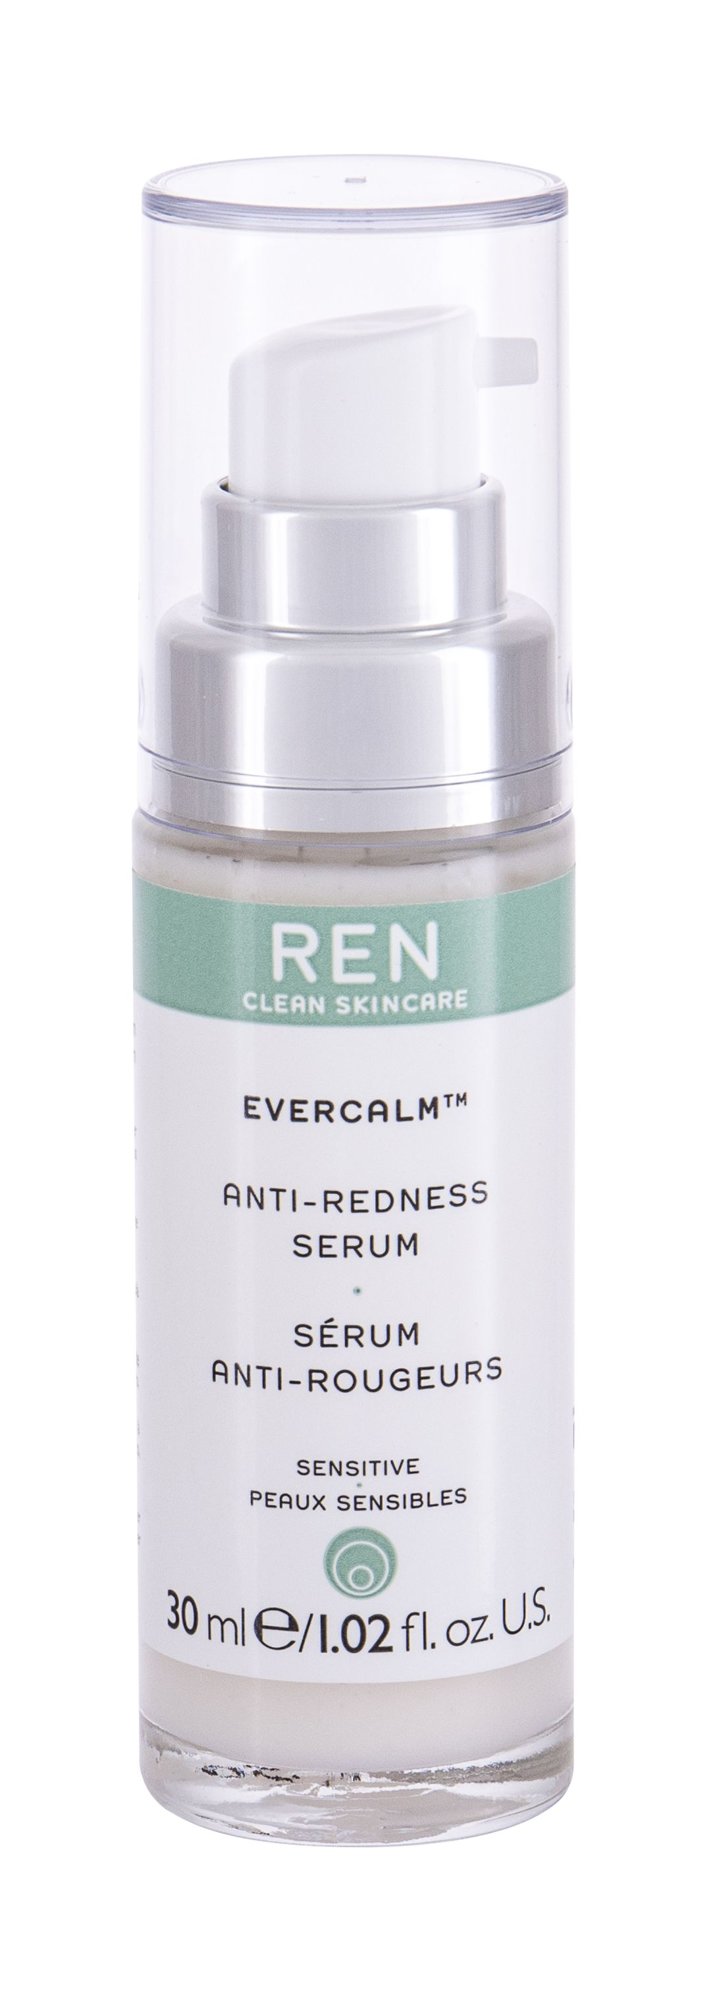 Ren Clean Skincare Evercalm Anti-Redness Veido serumas